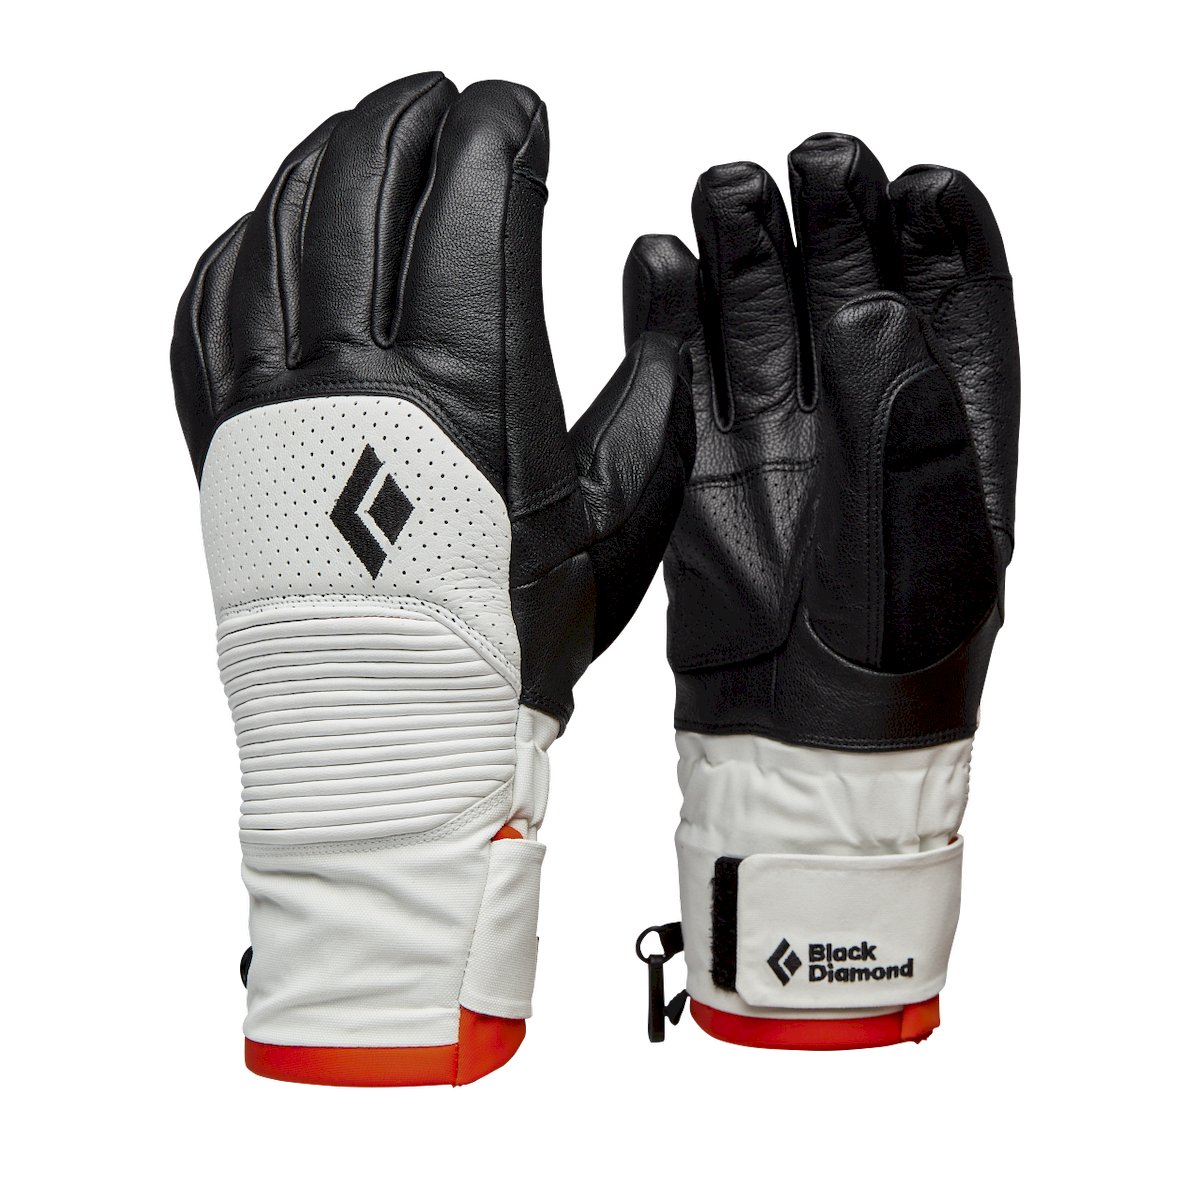 Black Diamond Impulse Gloves - Ski gloves